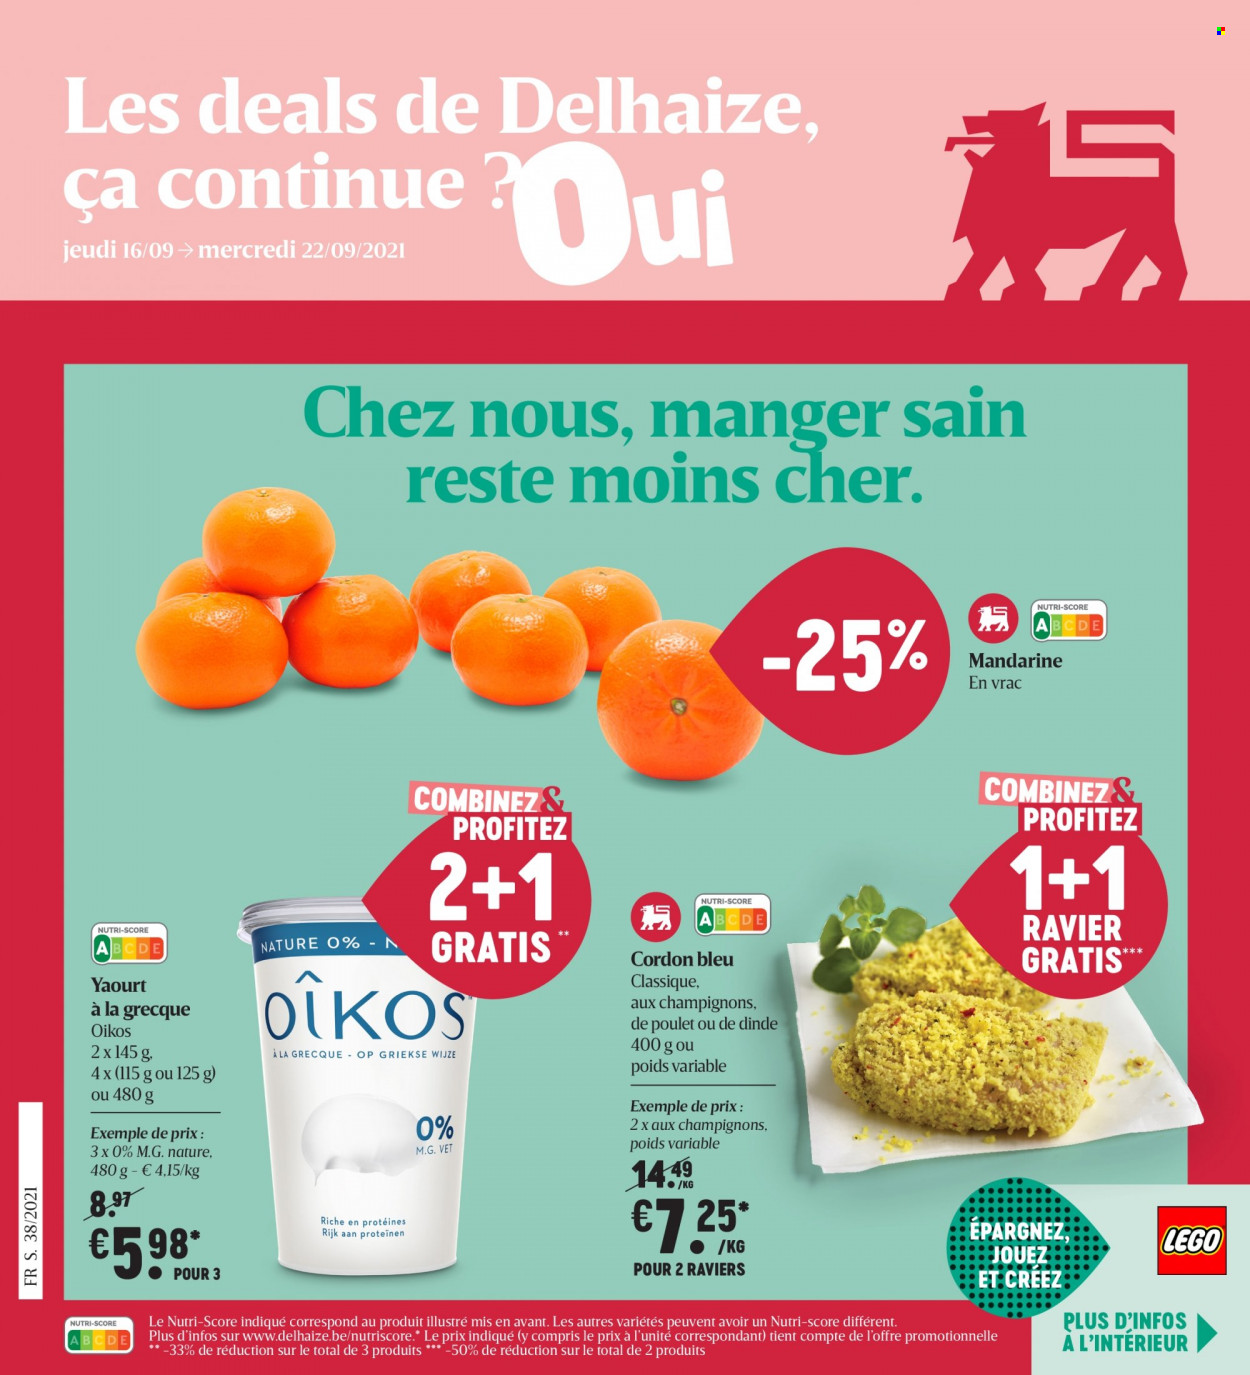 thumbnail - Catalogue Delhaize - 16/09/2021 - 22/09/2021 - Produits soldés - mandarines, cordon bleu, yaourt. Page 1.